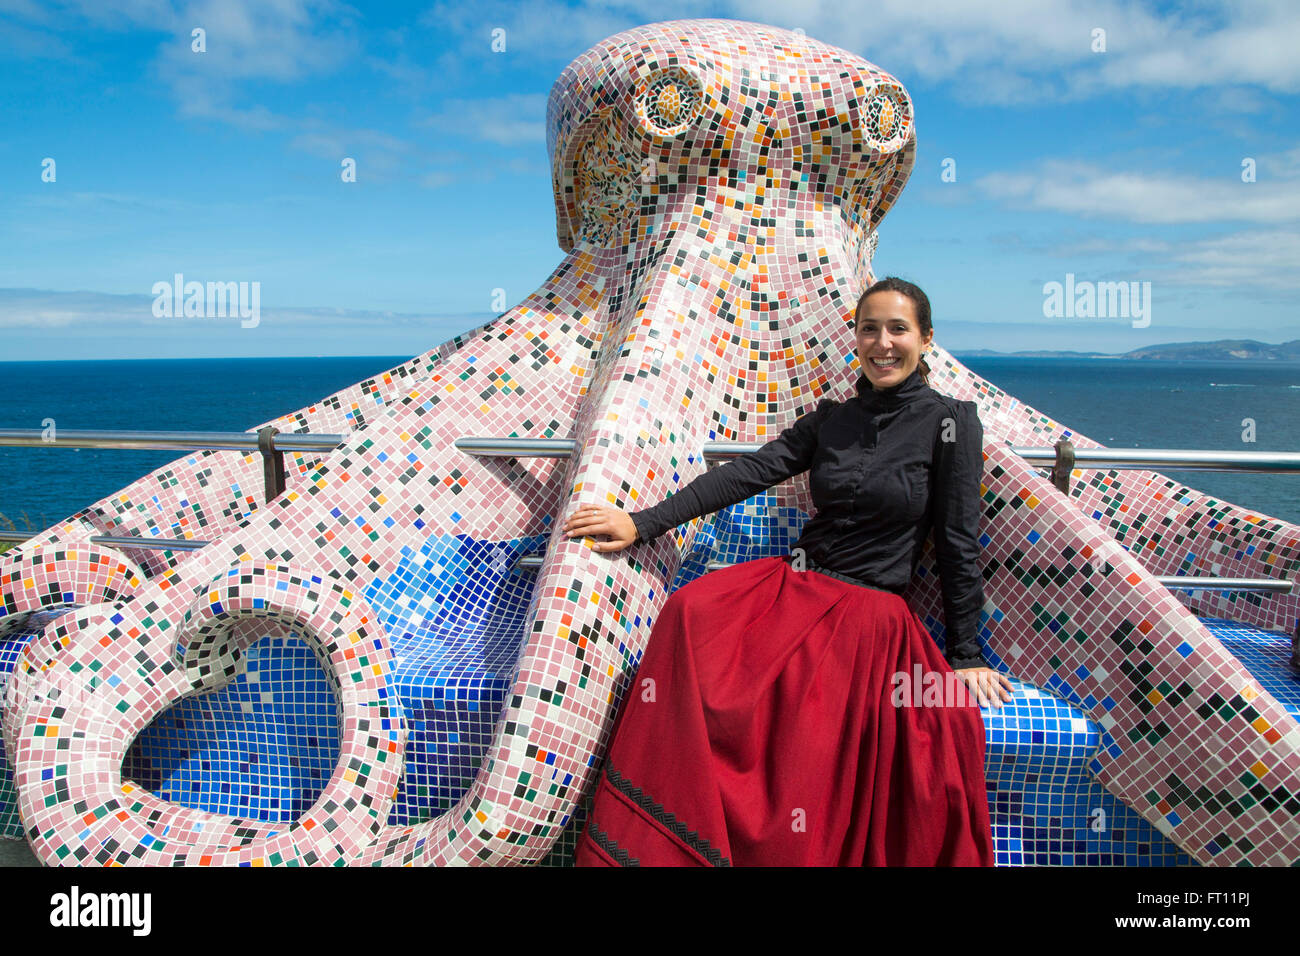 Turistella tour guide in traditional dress sitting on a giant mosaic octopus sculpture, Corunna La Coruna, Galicia, Spain Stock Photo